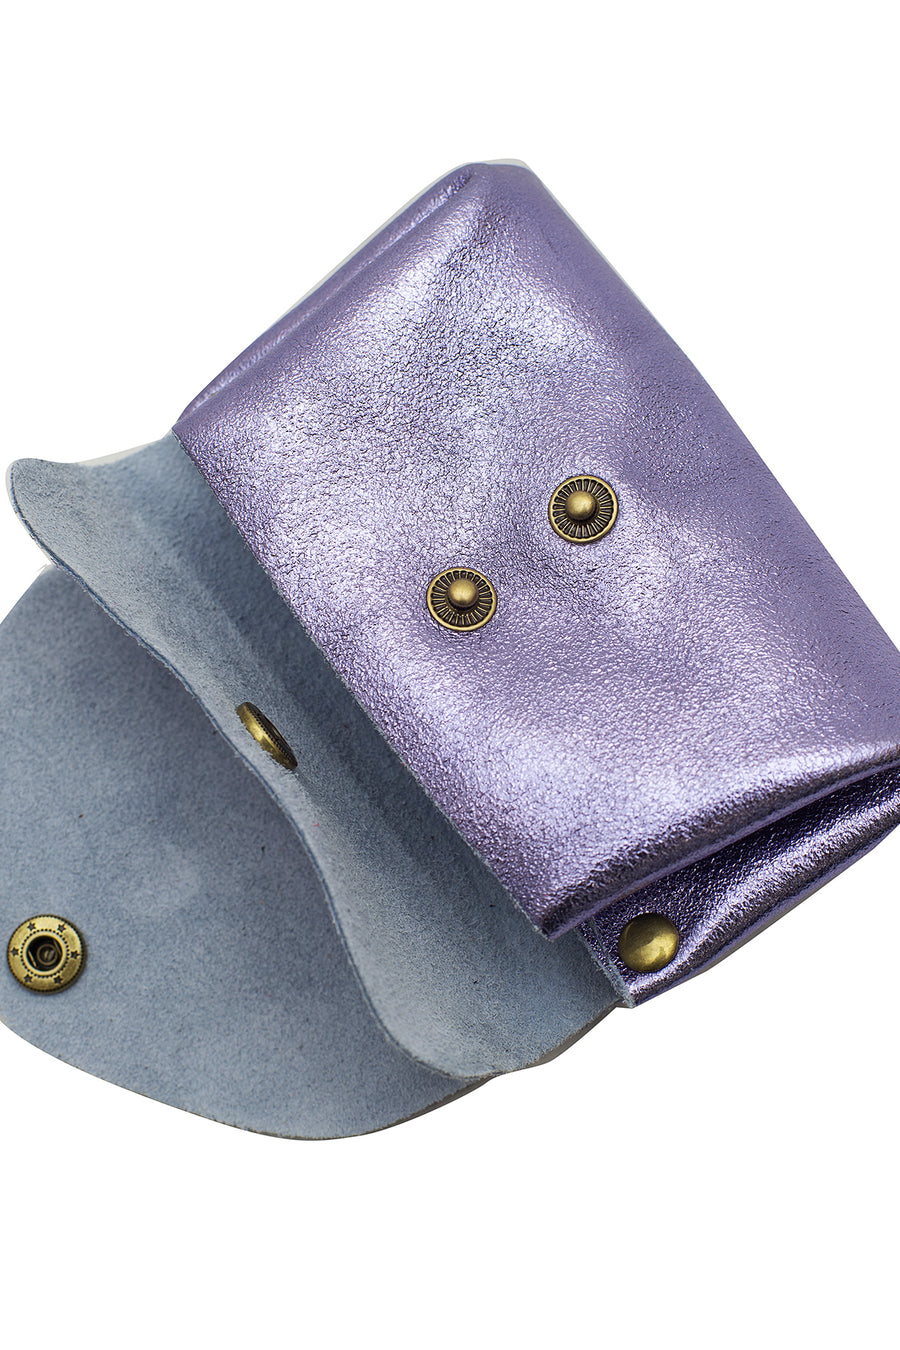 Porte-monnaie sac SUZIE METAL - Violet métal